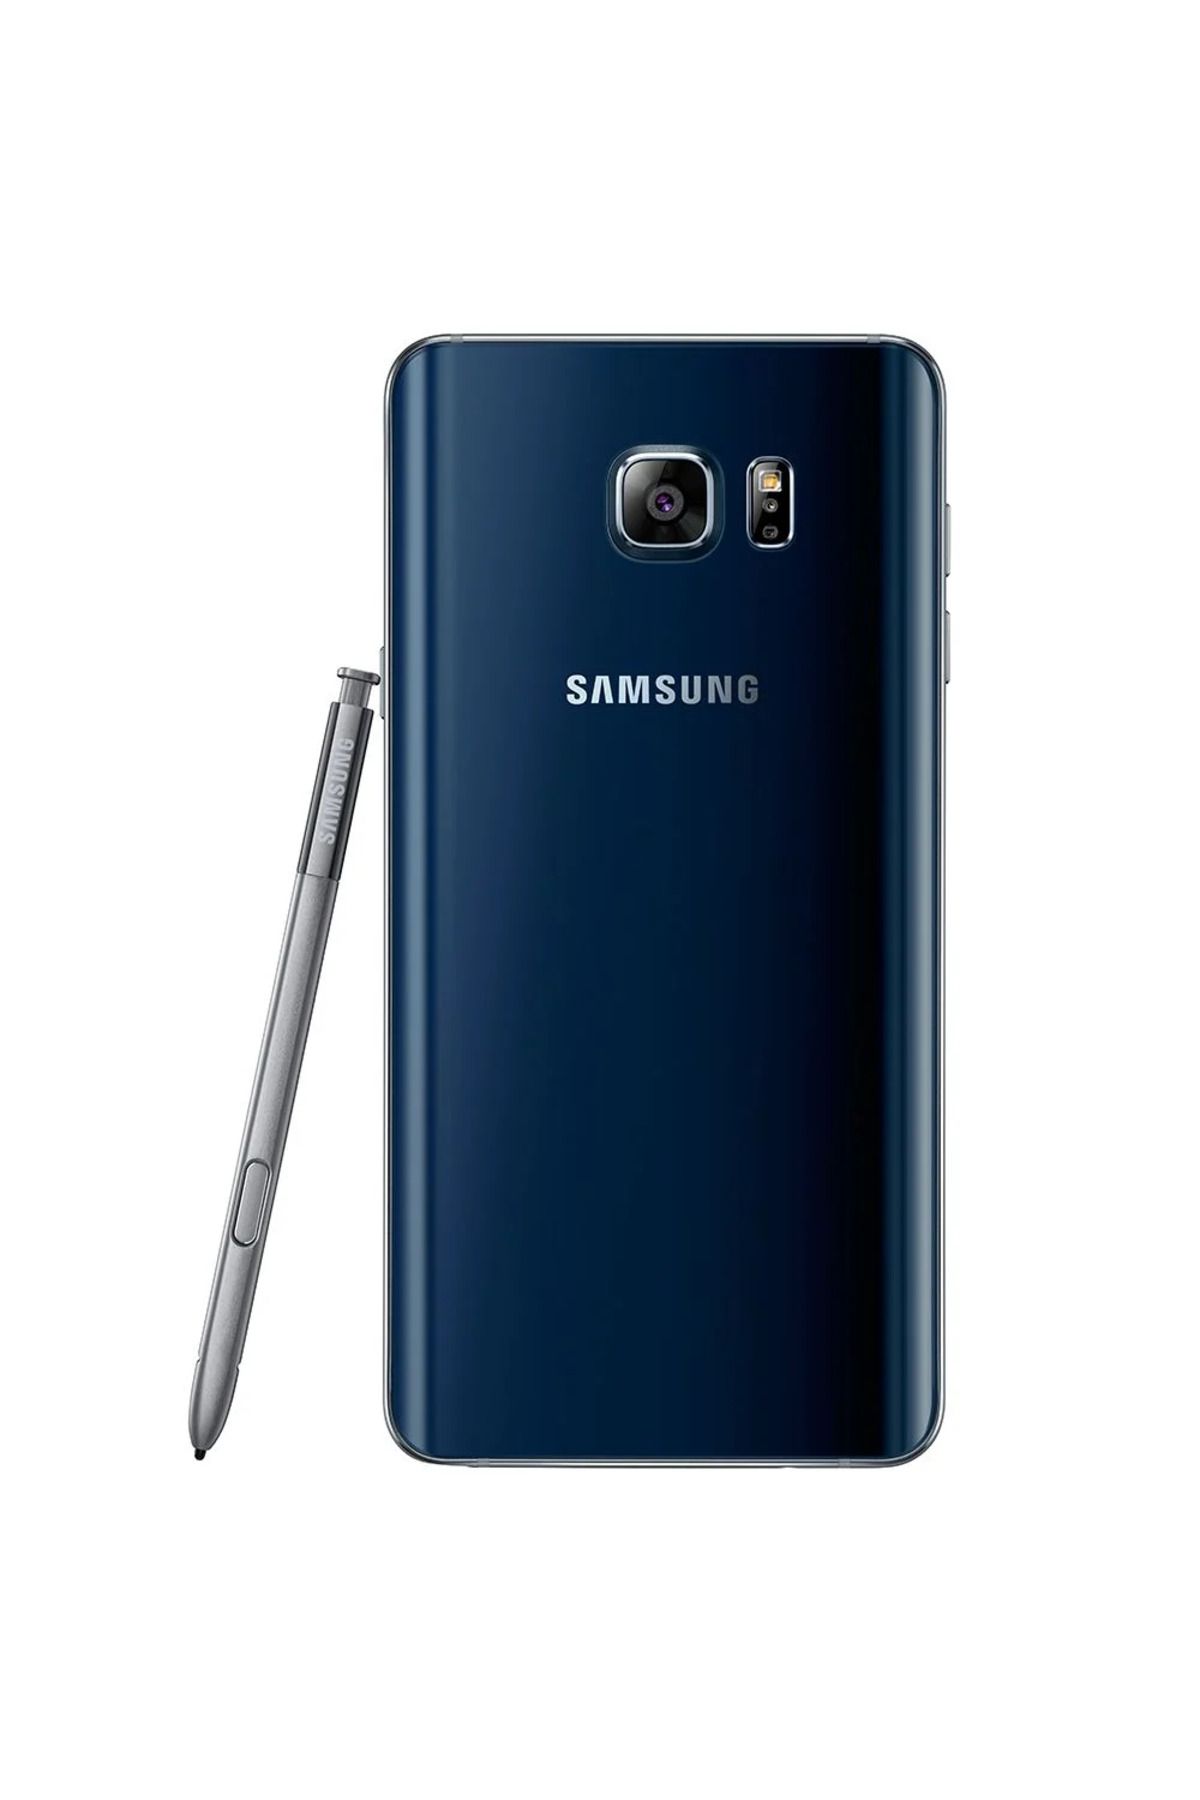 Samsung Galaxy Note 5 32GB Yenilenmiş Cep Telefonu (12 Ay Garantili)